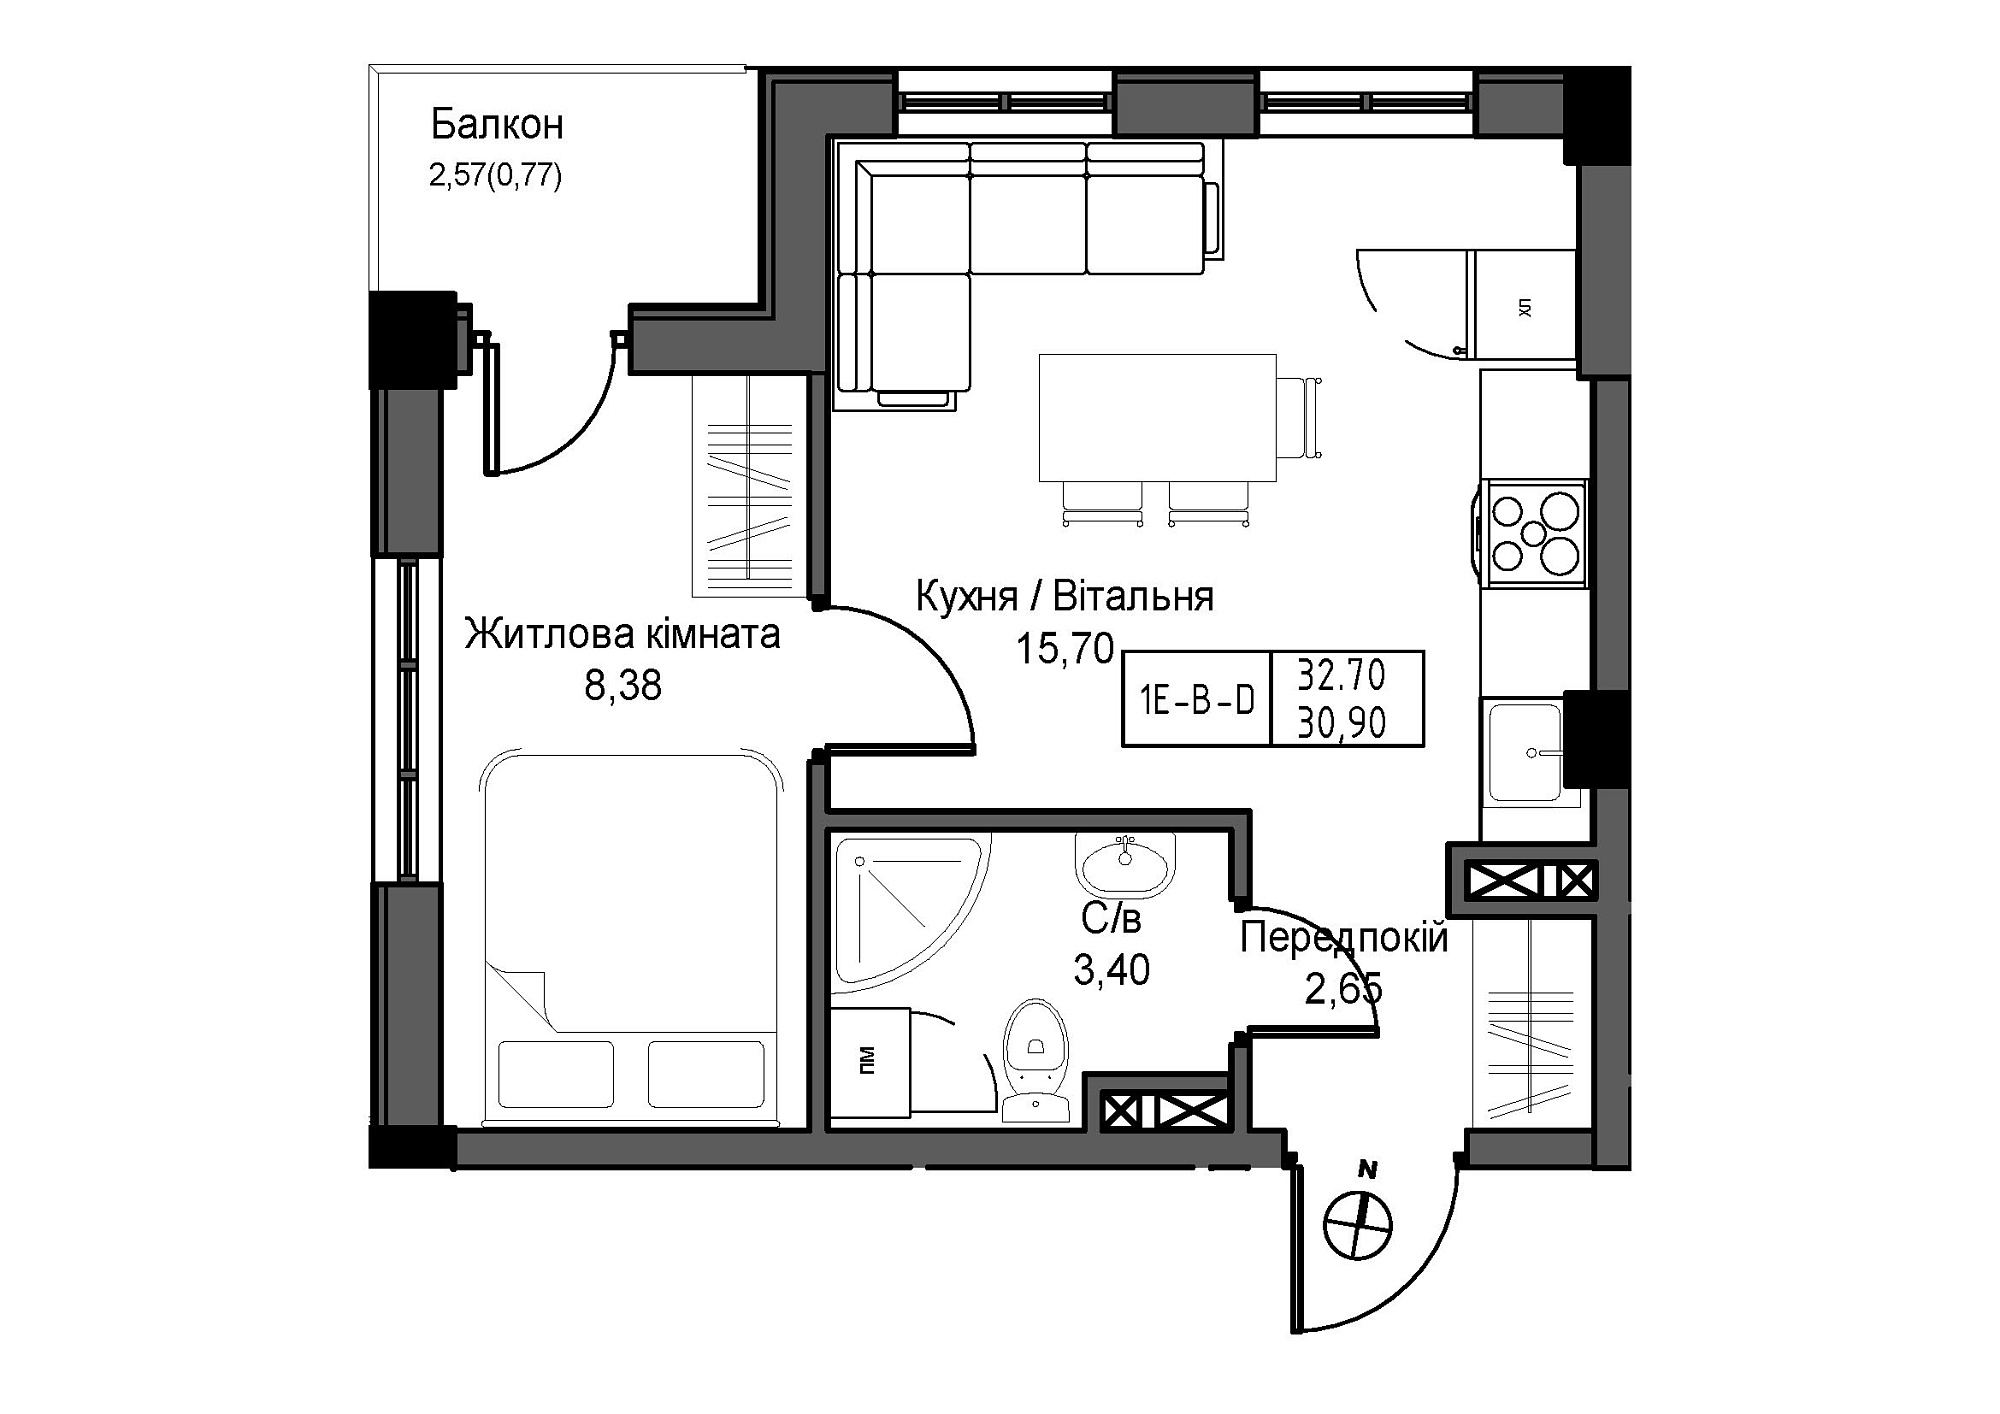 Планування 1-к квартира площею 30.9м2, UM-007-09/0002.